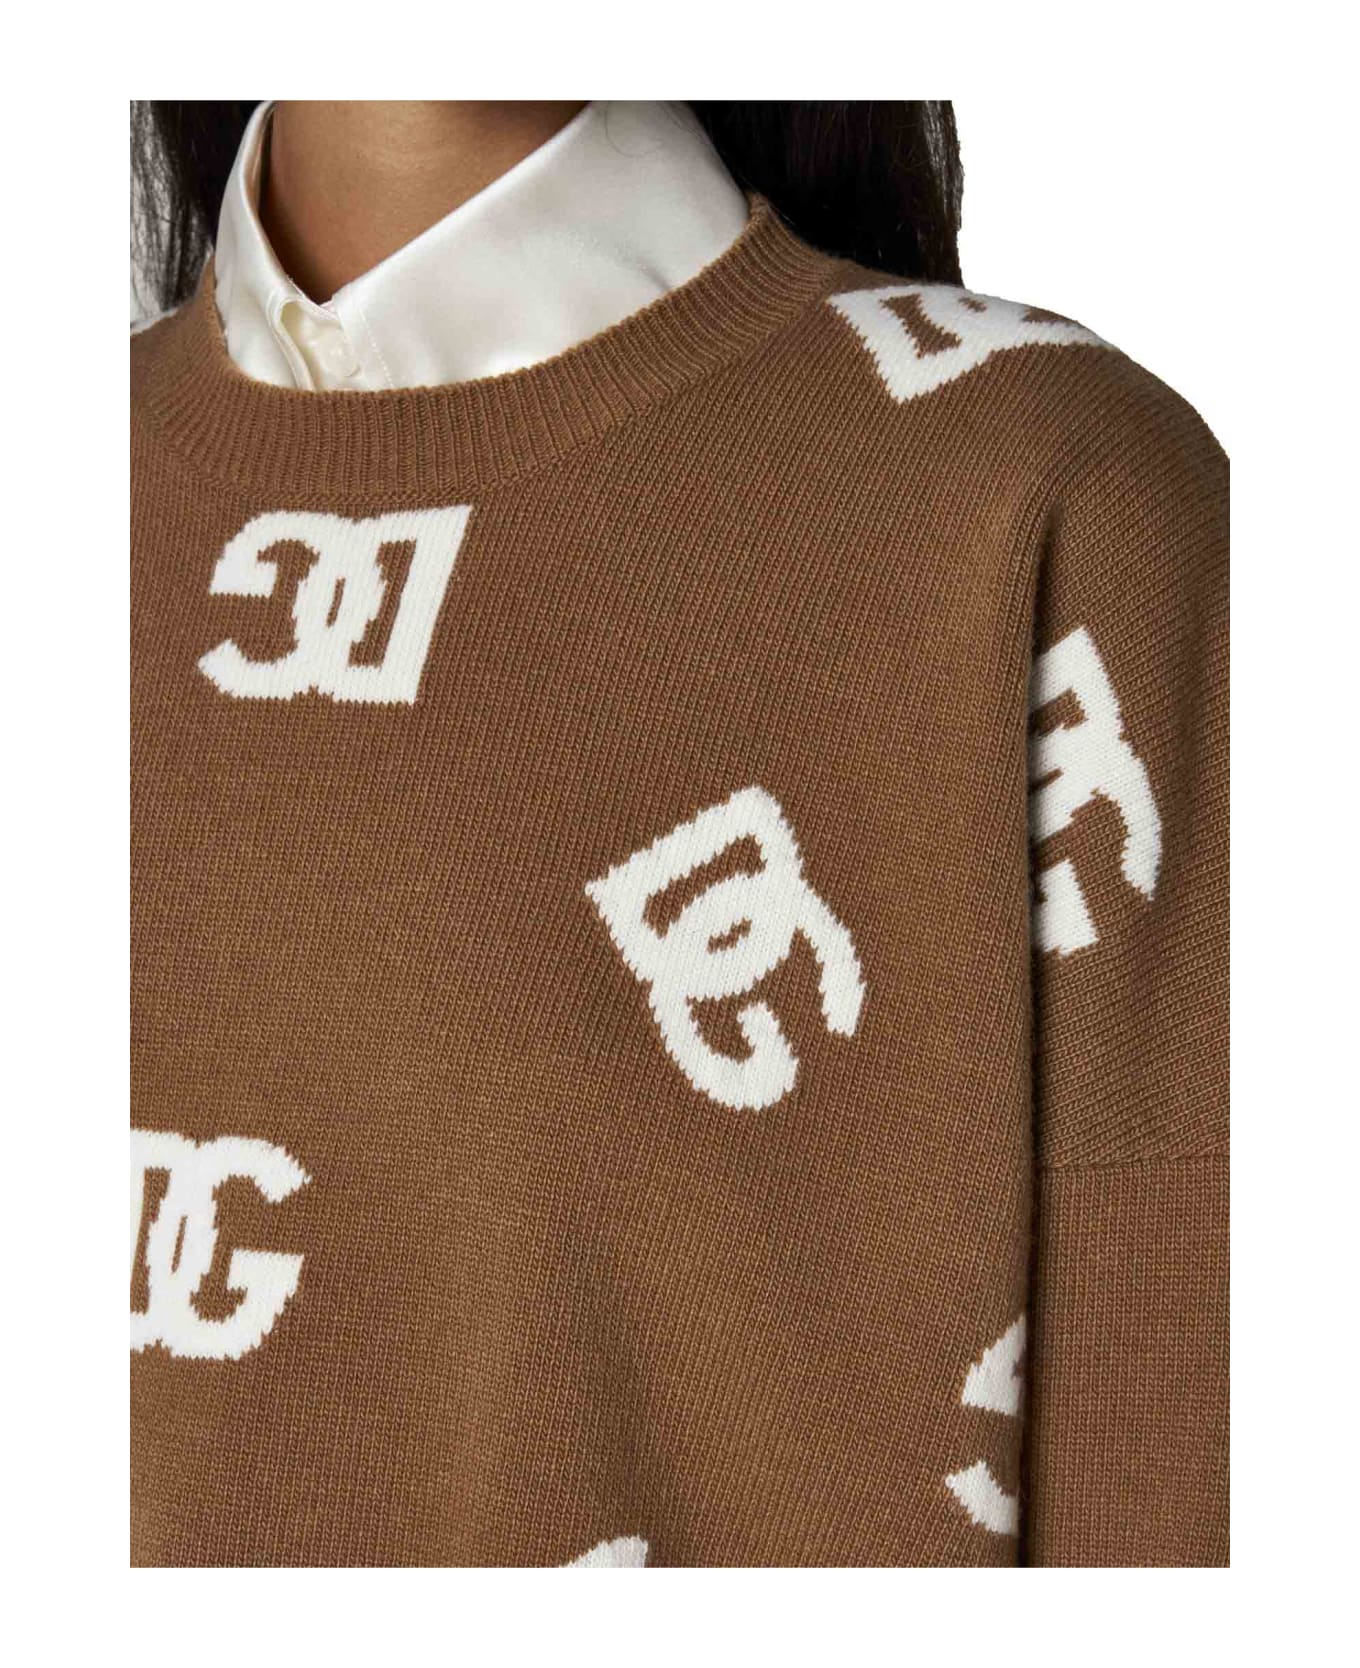 Dolce & Gabbana Logo Embroidery Cropped Sweater - Variante Abbinata